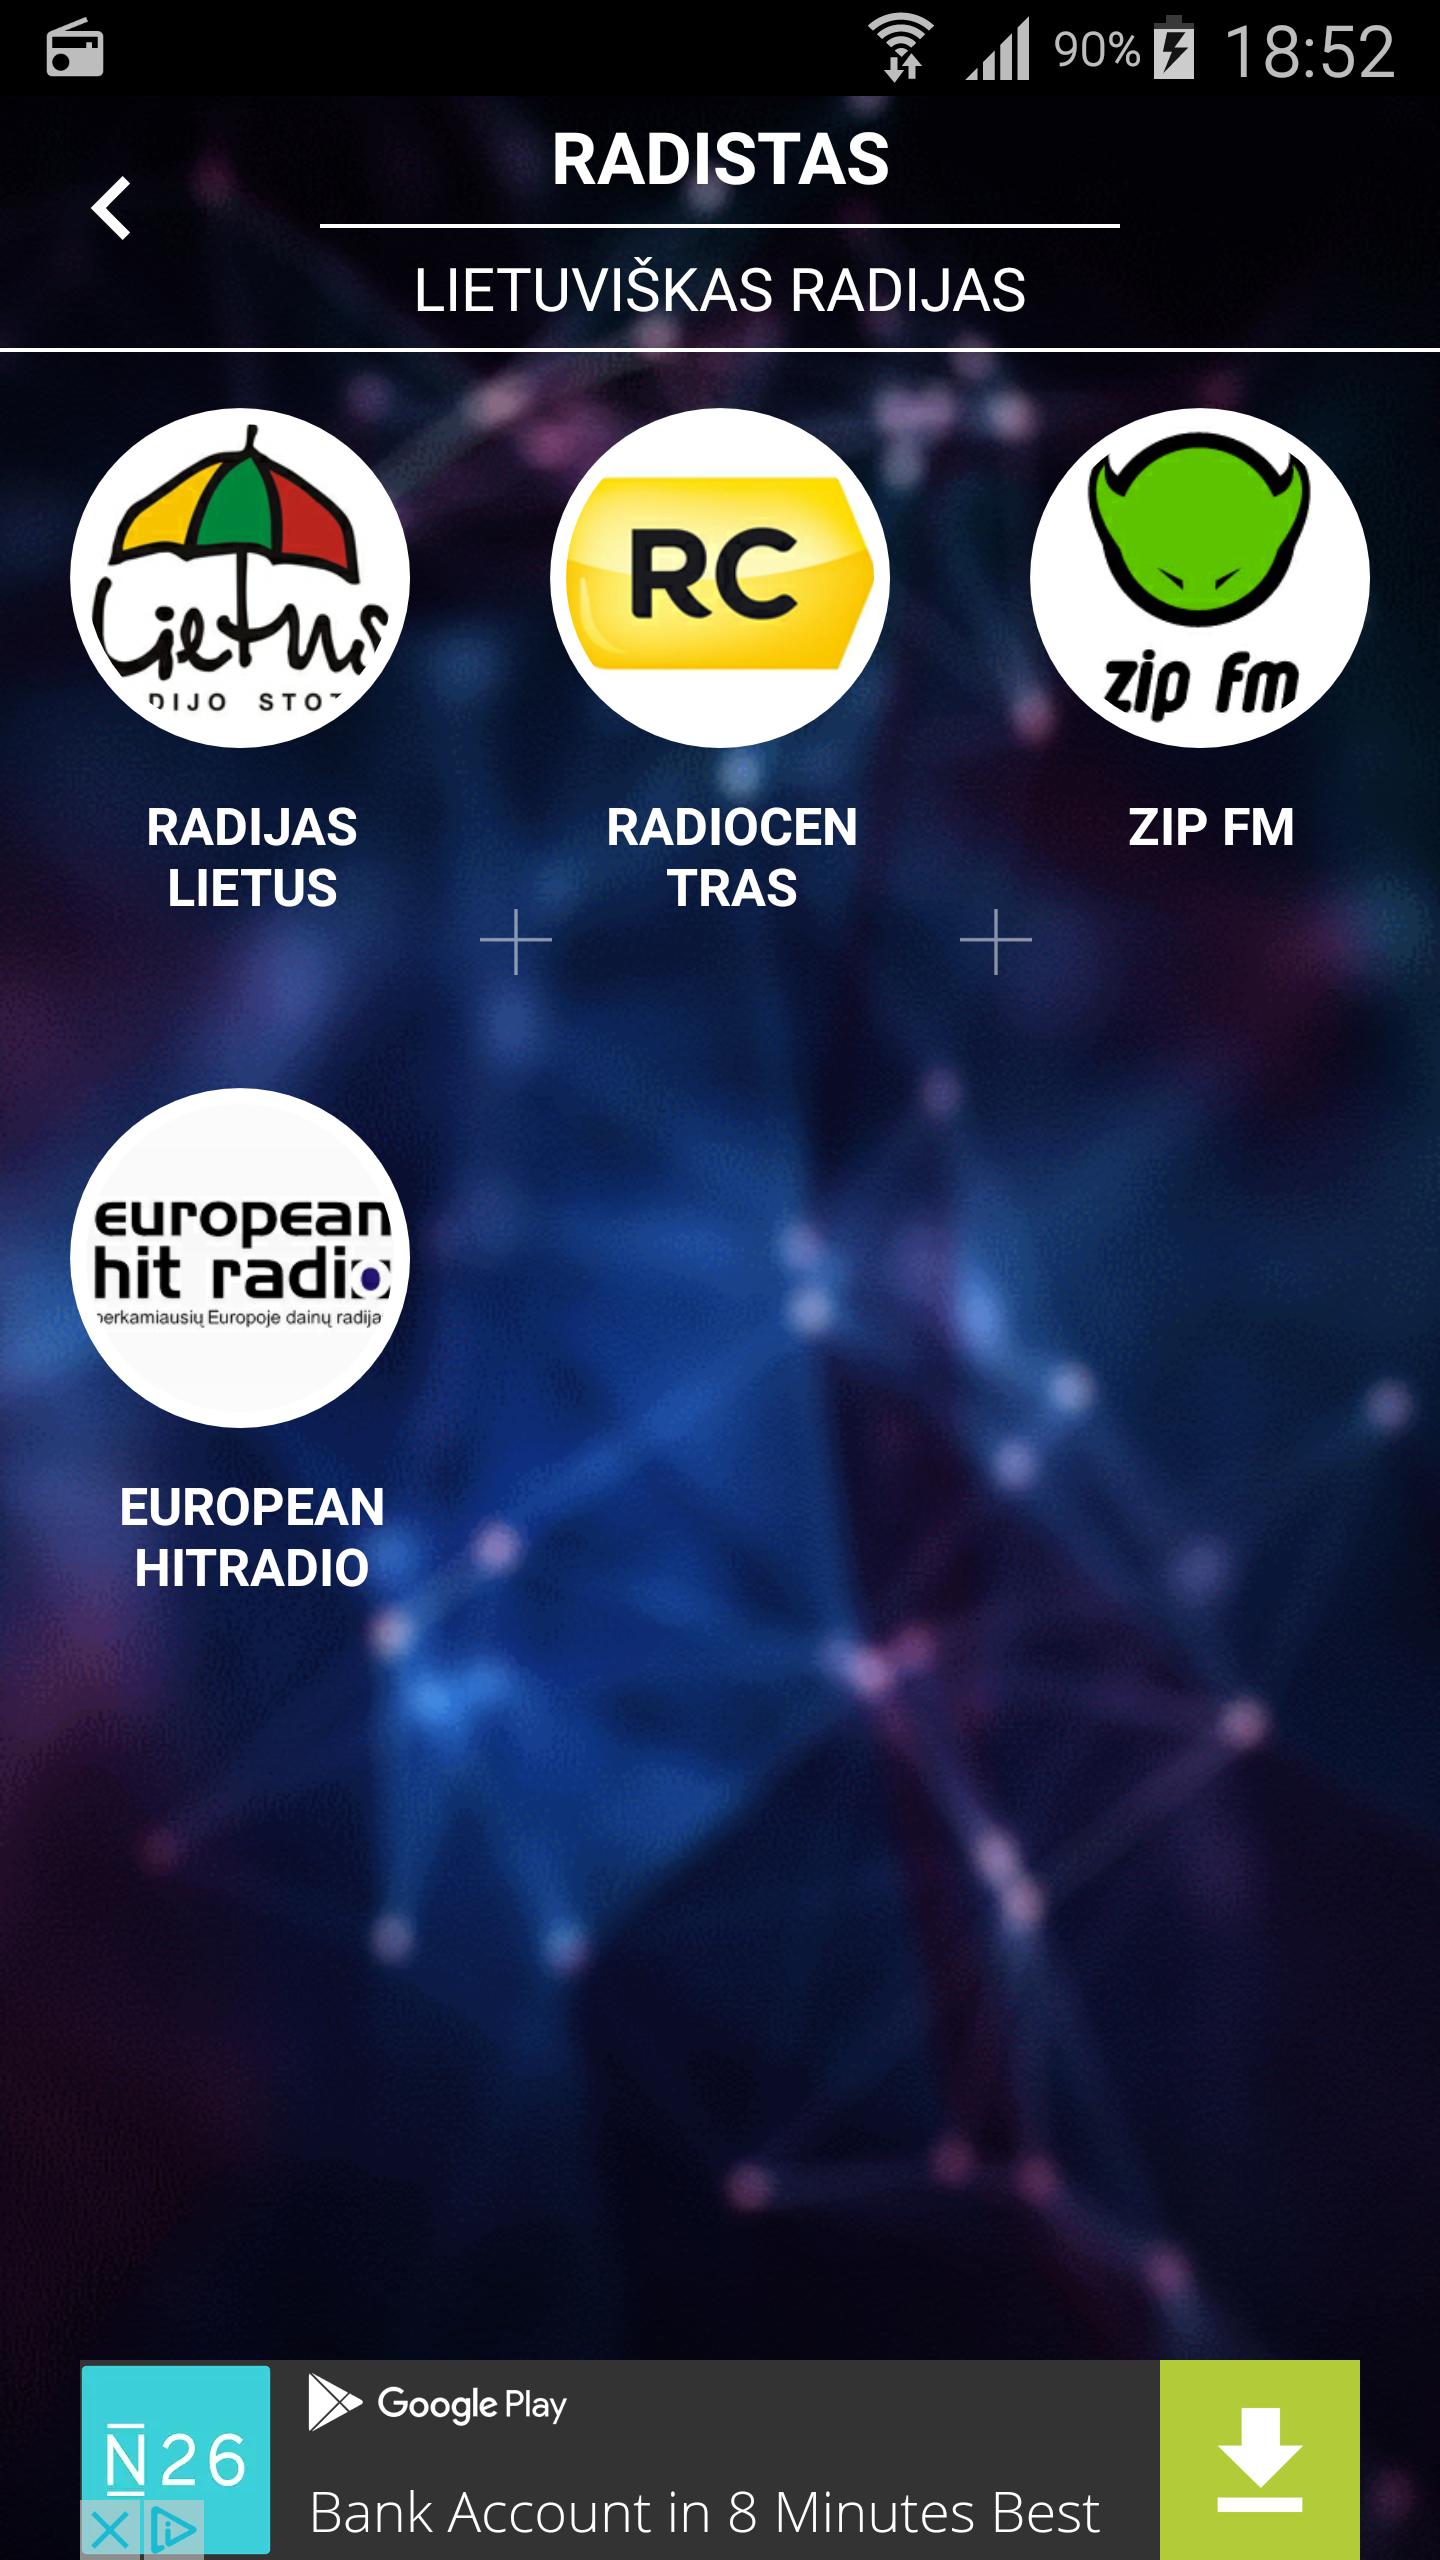 Radistas - Lietuviškas radijas for Android - APK Download